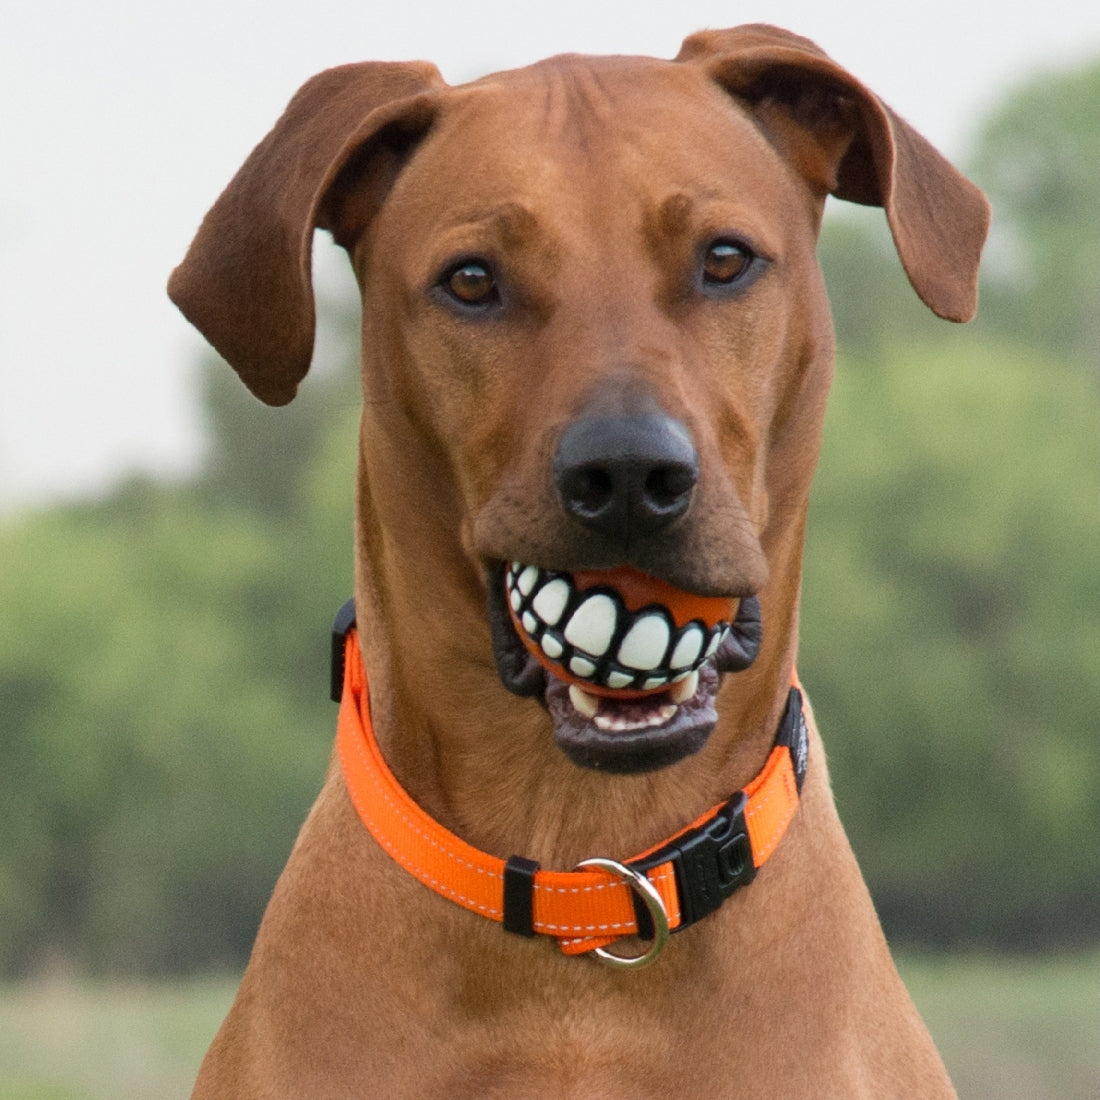 Dog wearing Rogz collar with a ball shaped like teeth.